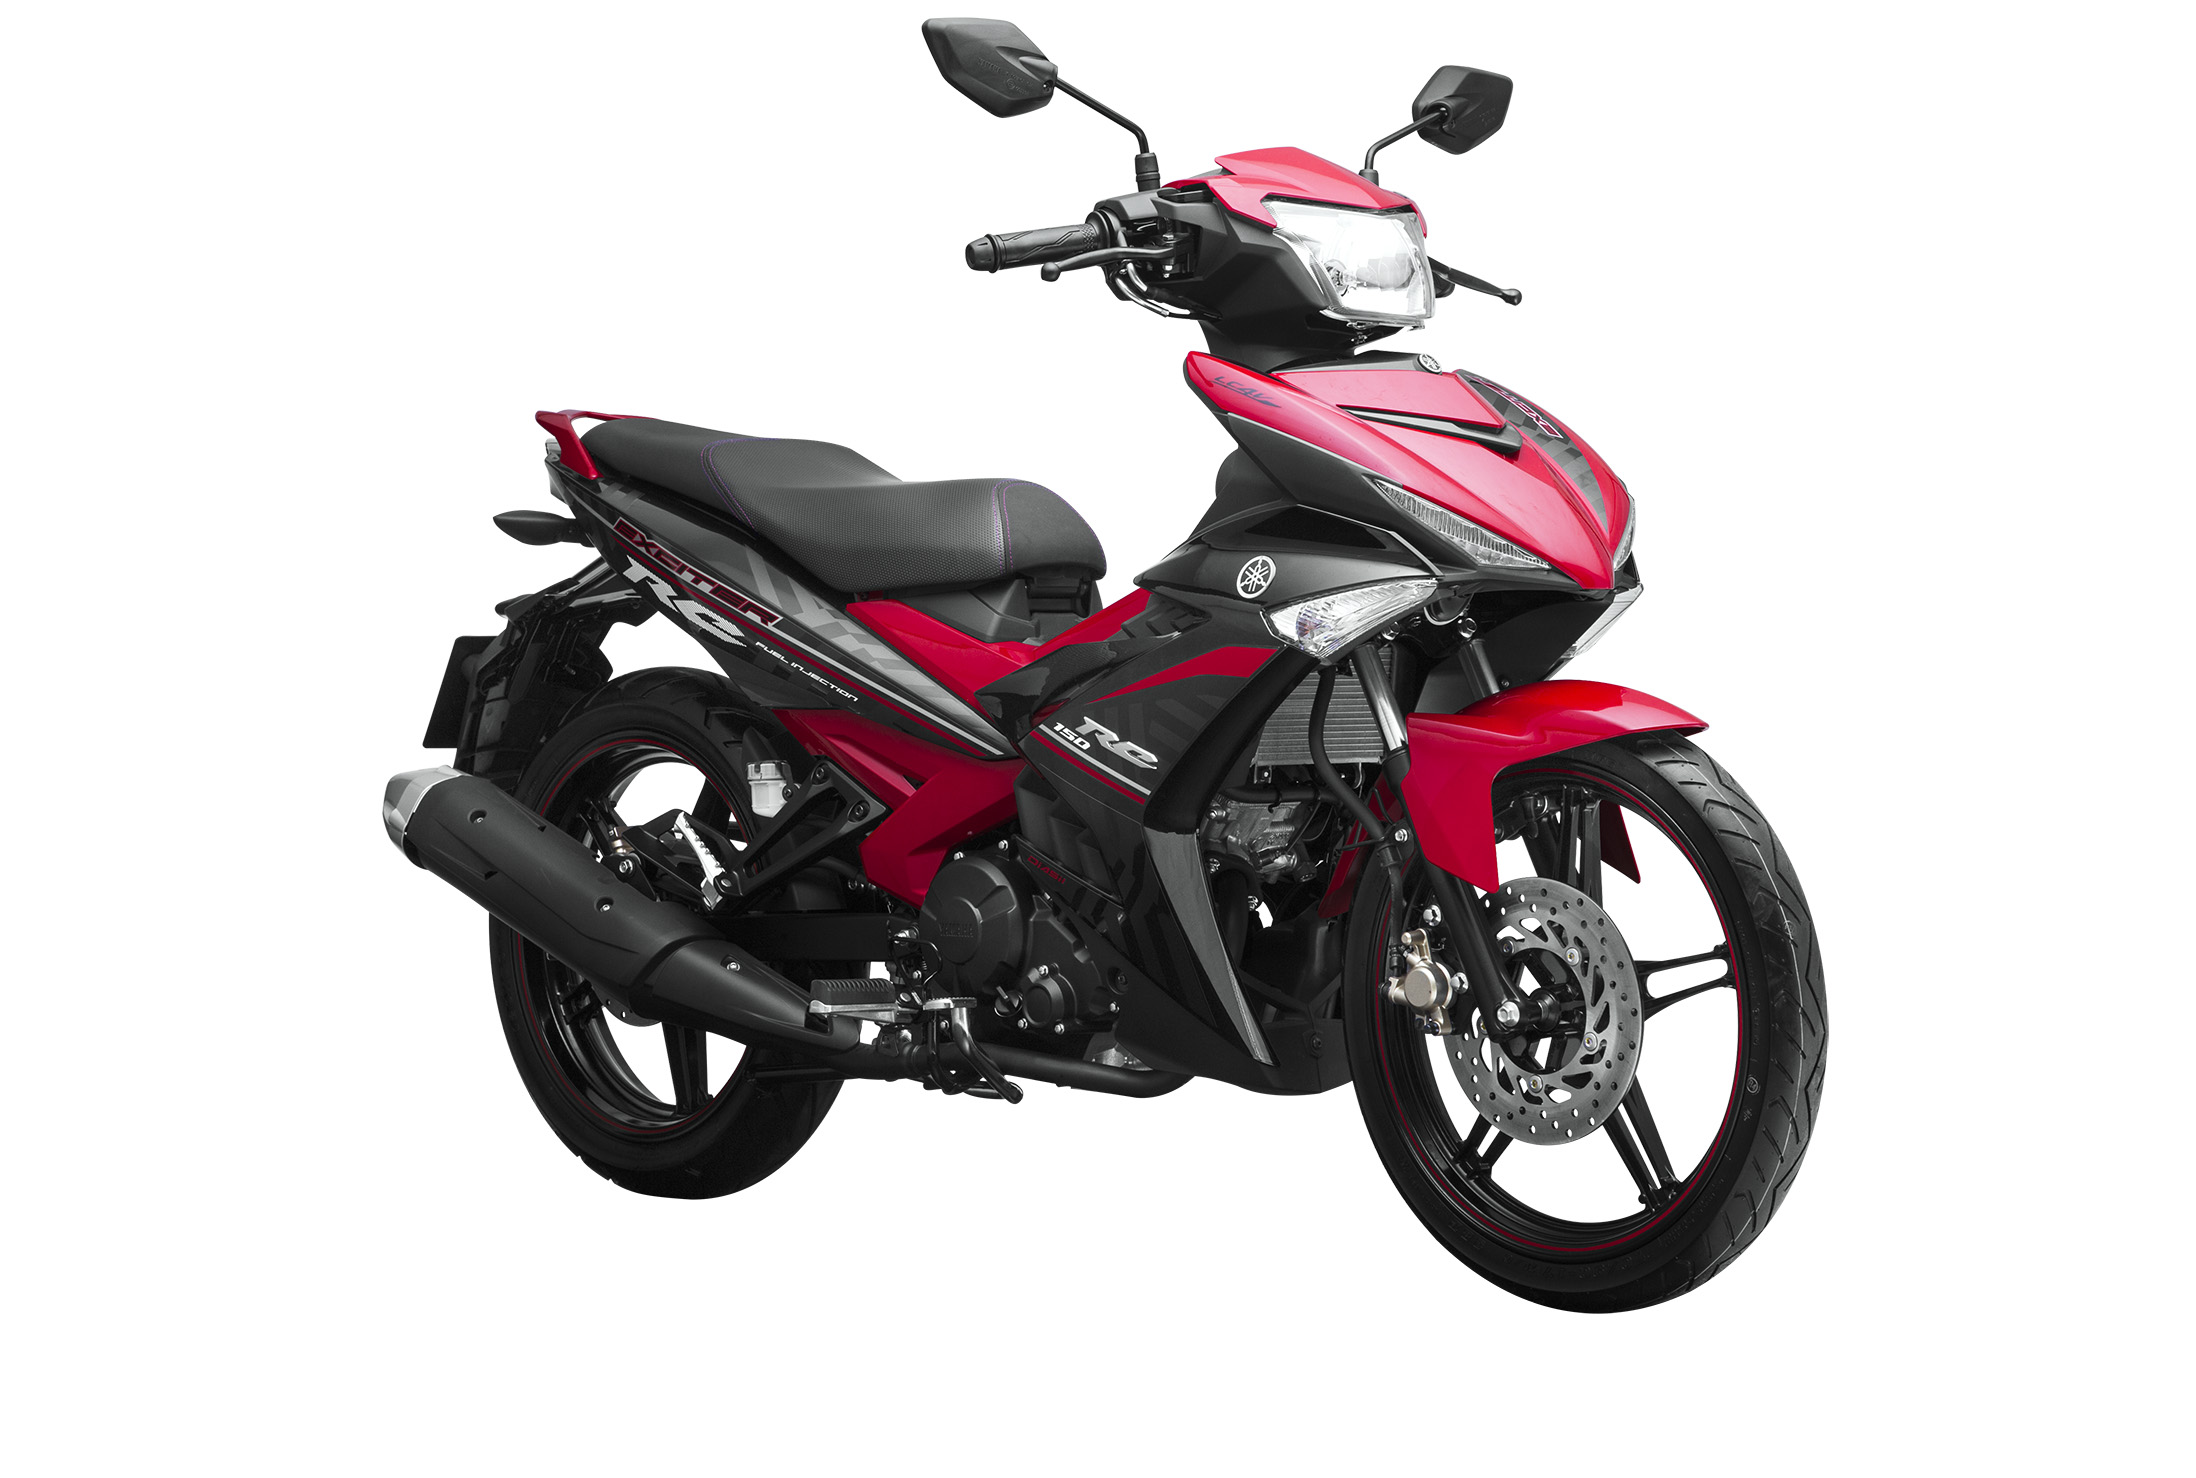 2015-Yamaha-Exciter-T150-150LC-red - MotoMalaya.net - berita dunia permotoran2196 x 1478